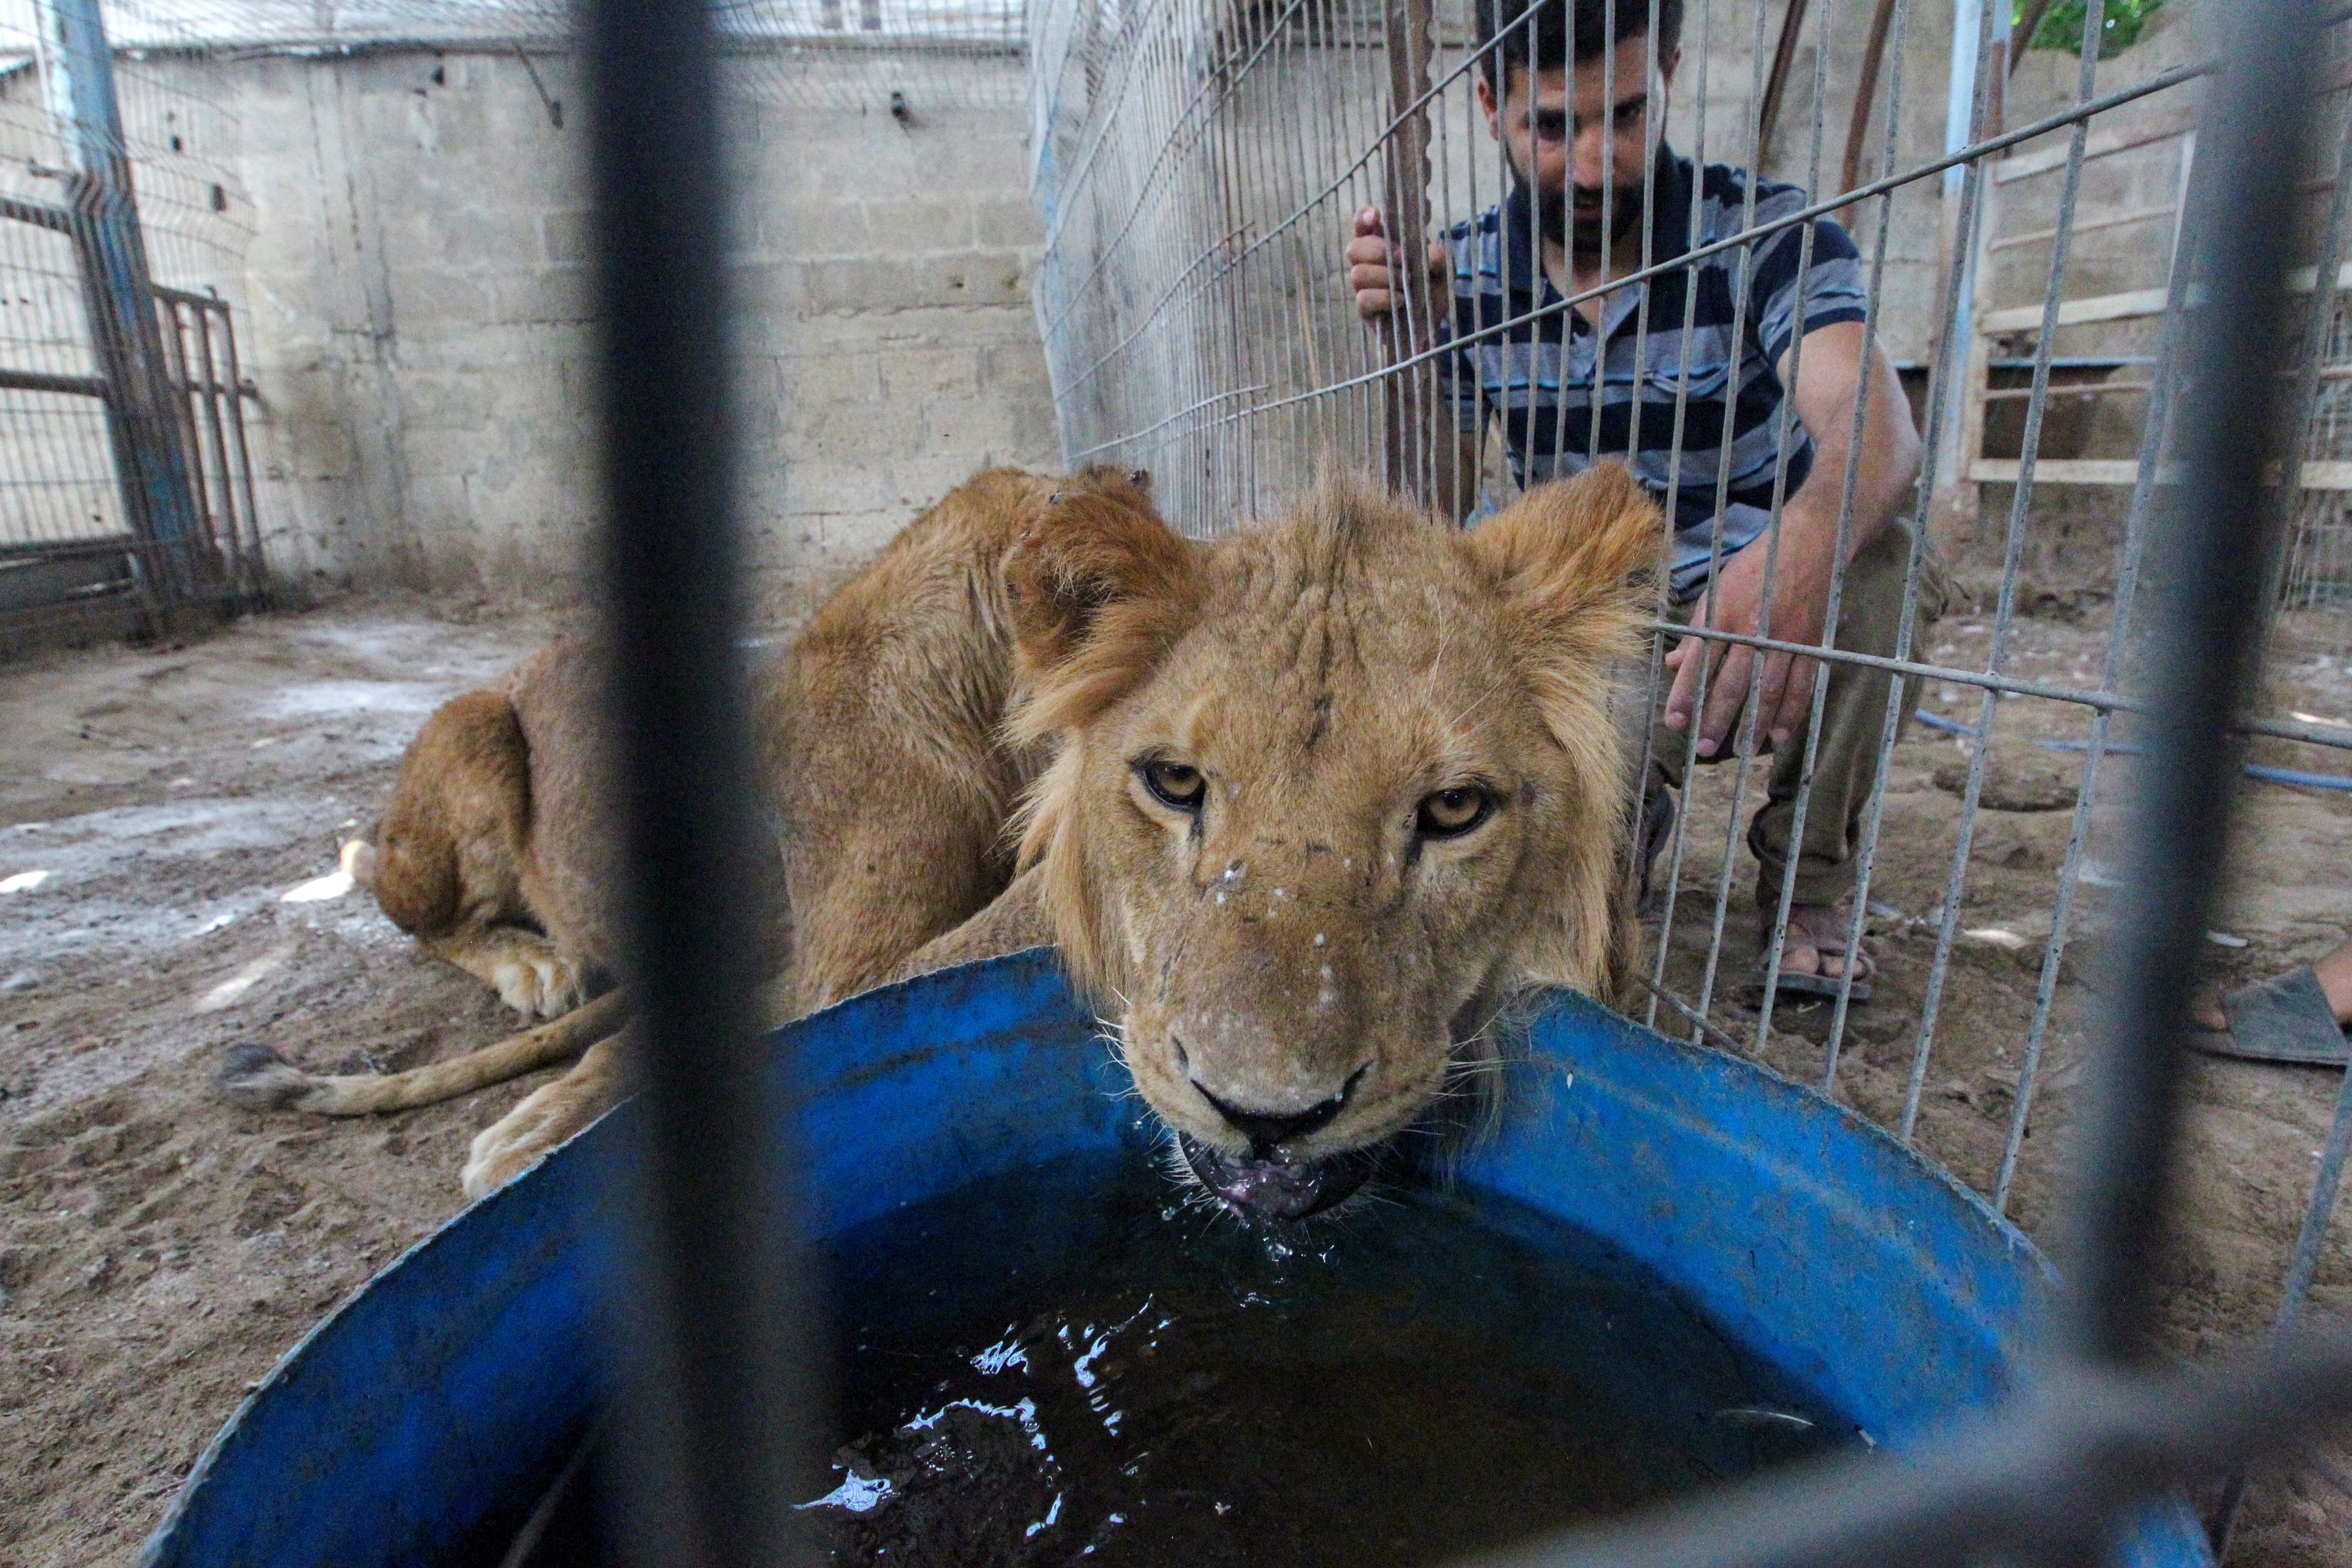 Gaza zoo animals find new sanctuary amid war